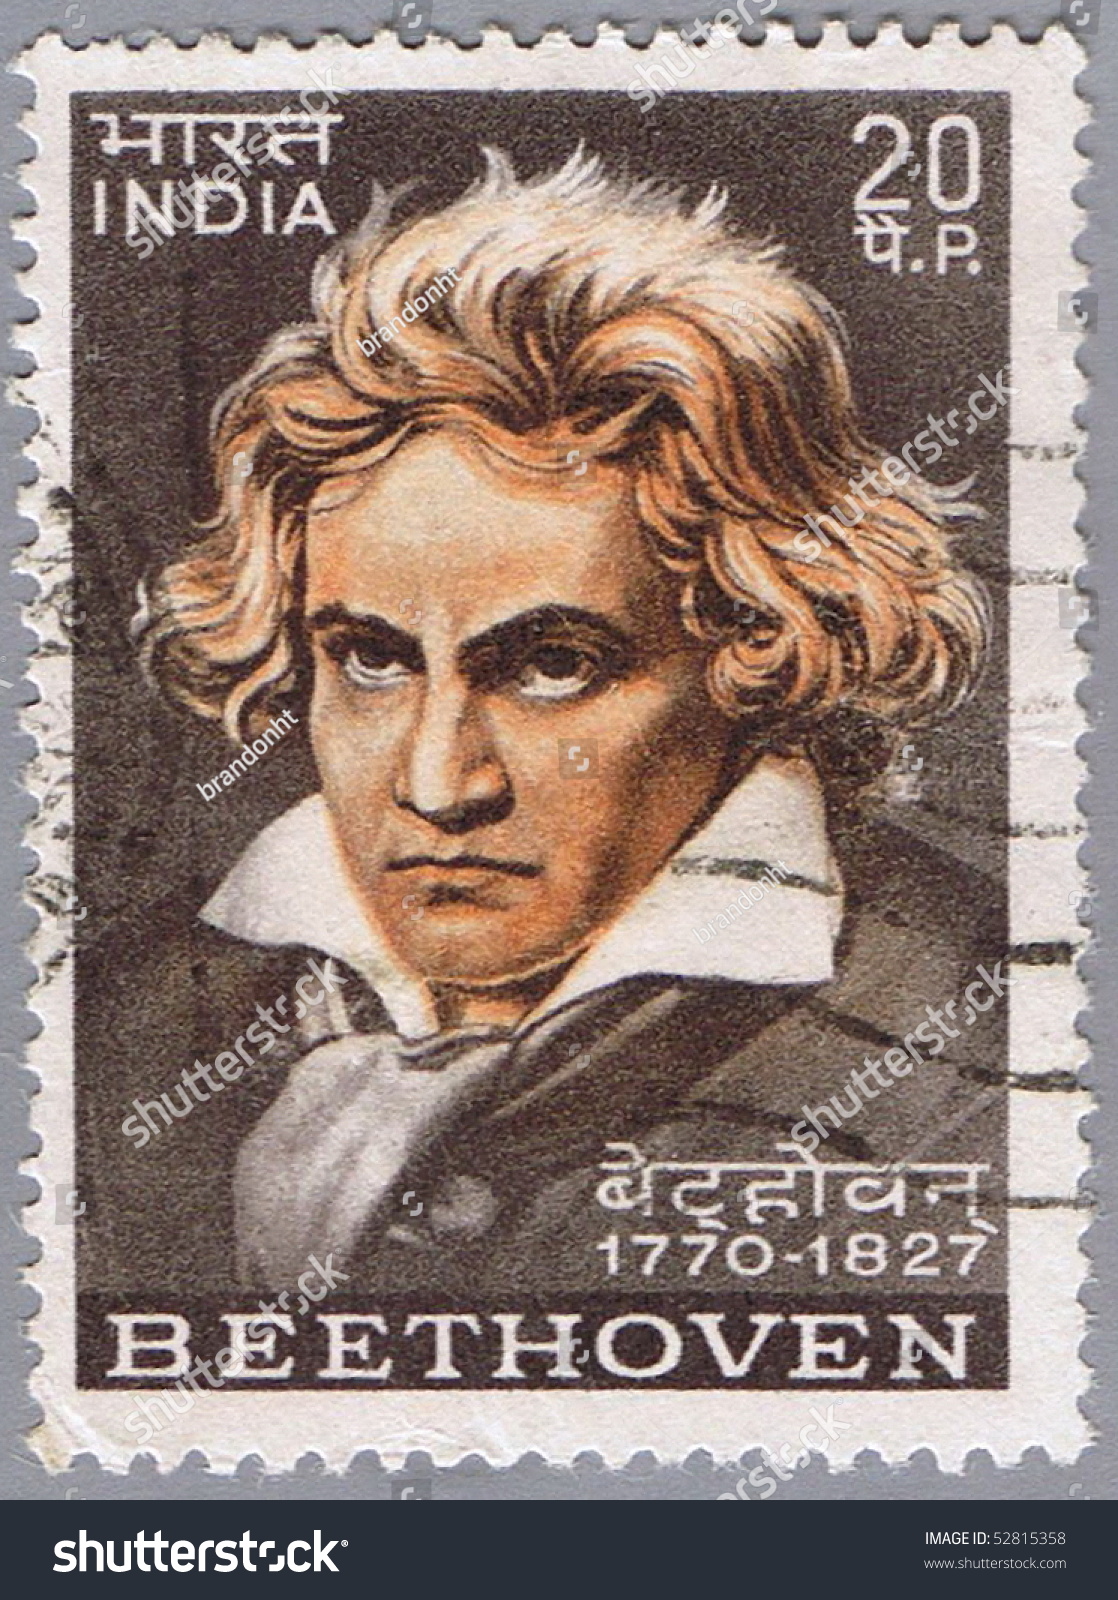 Beethoven essay